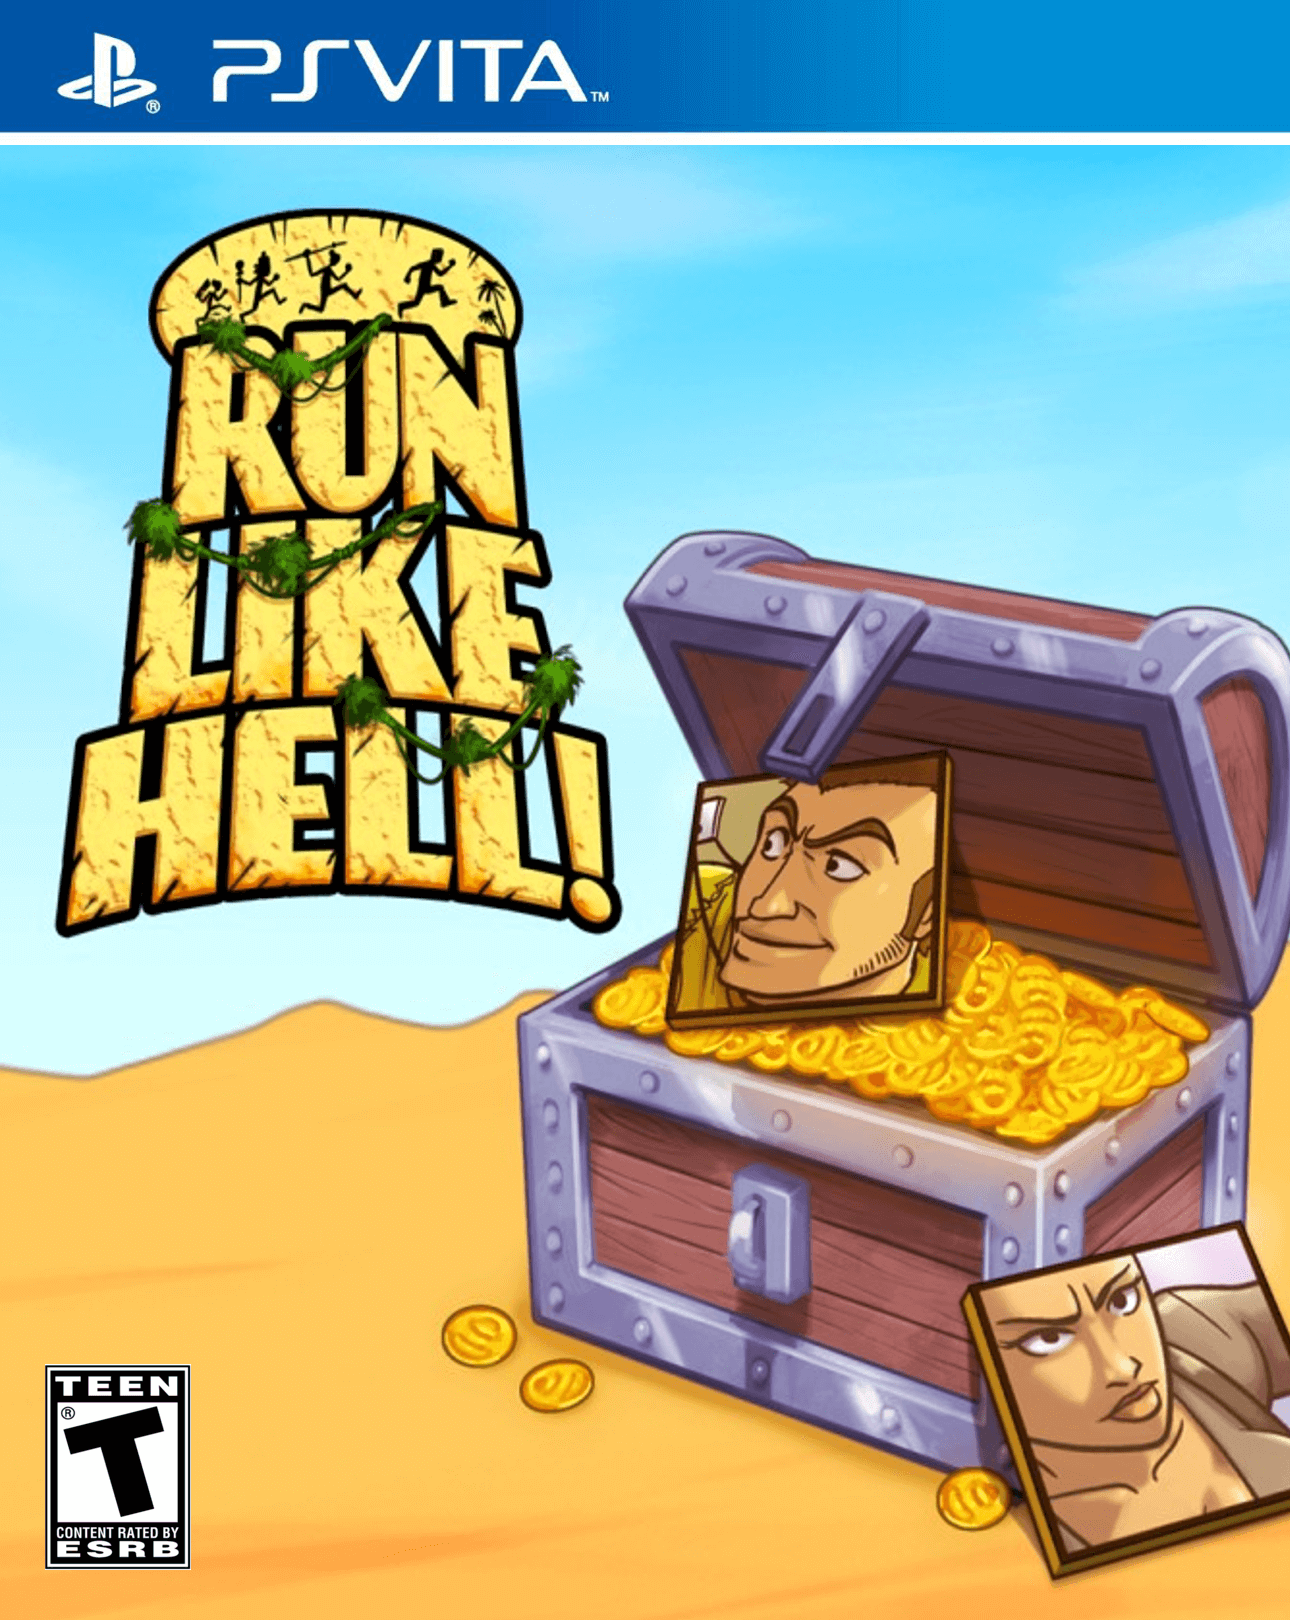 Run Like Hell!